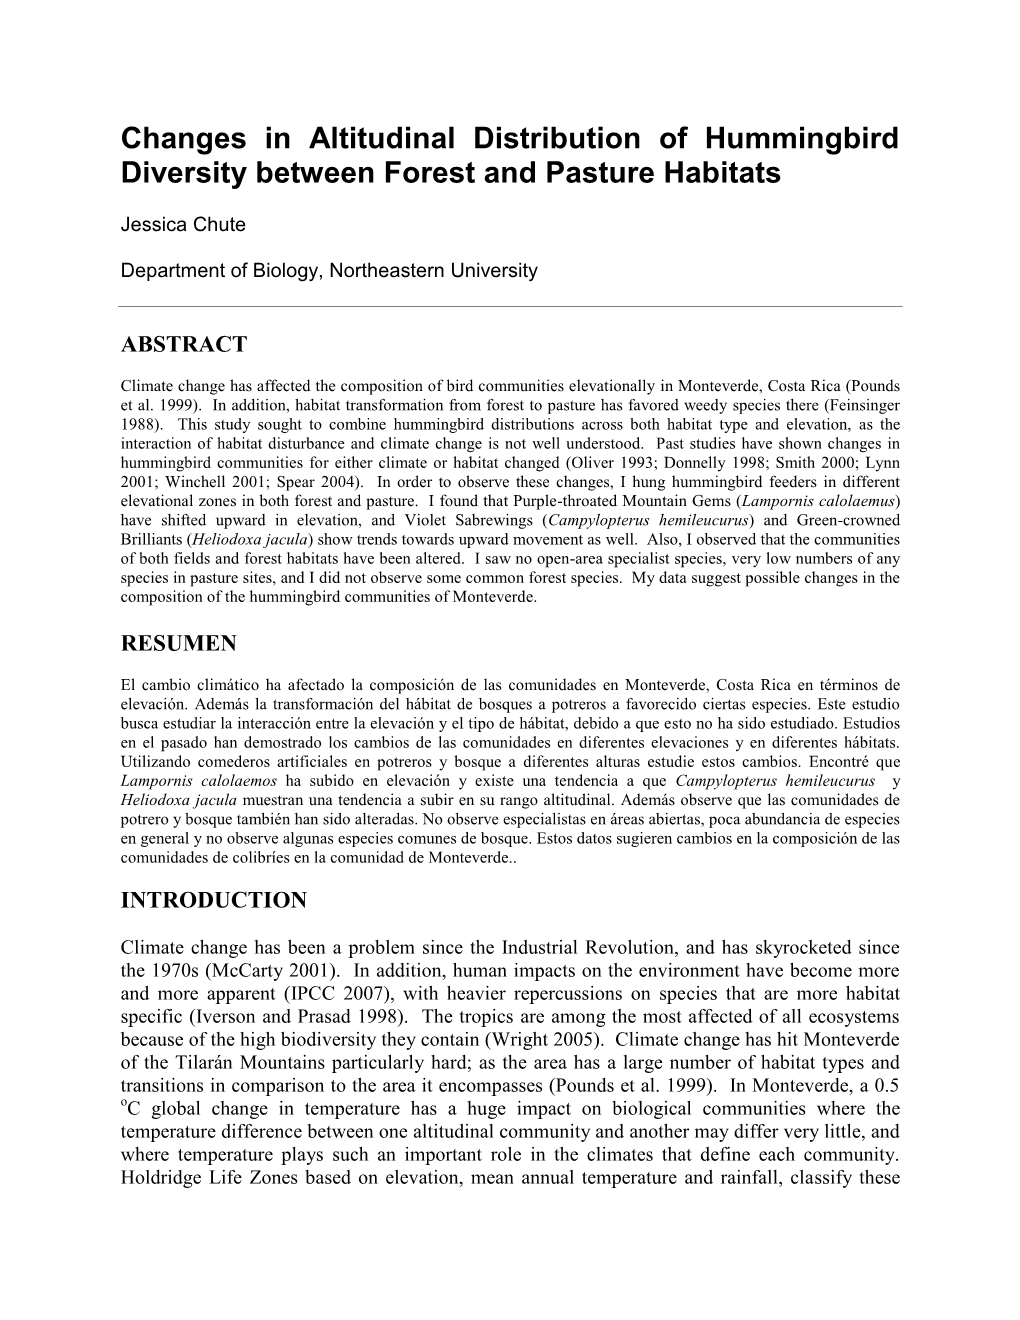 Changes in Altitudinal Distribution of Hummingbird Diversity Between Forest and Pasture Habitats